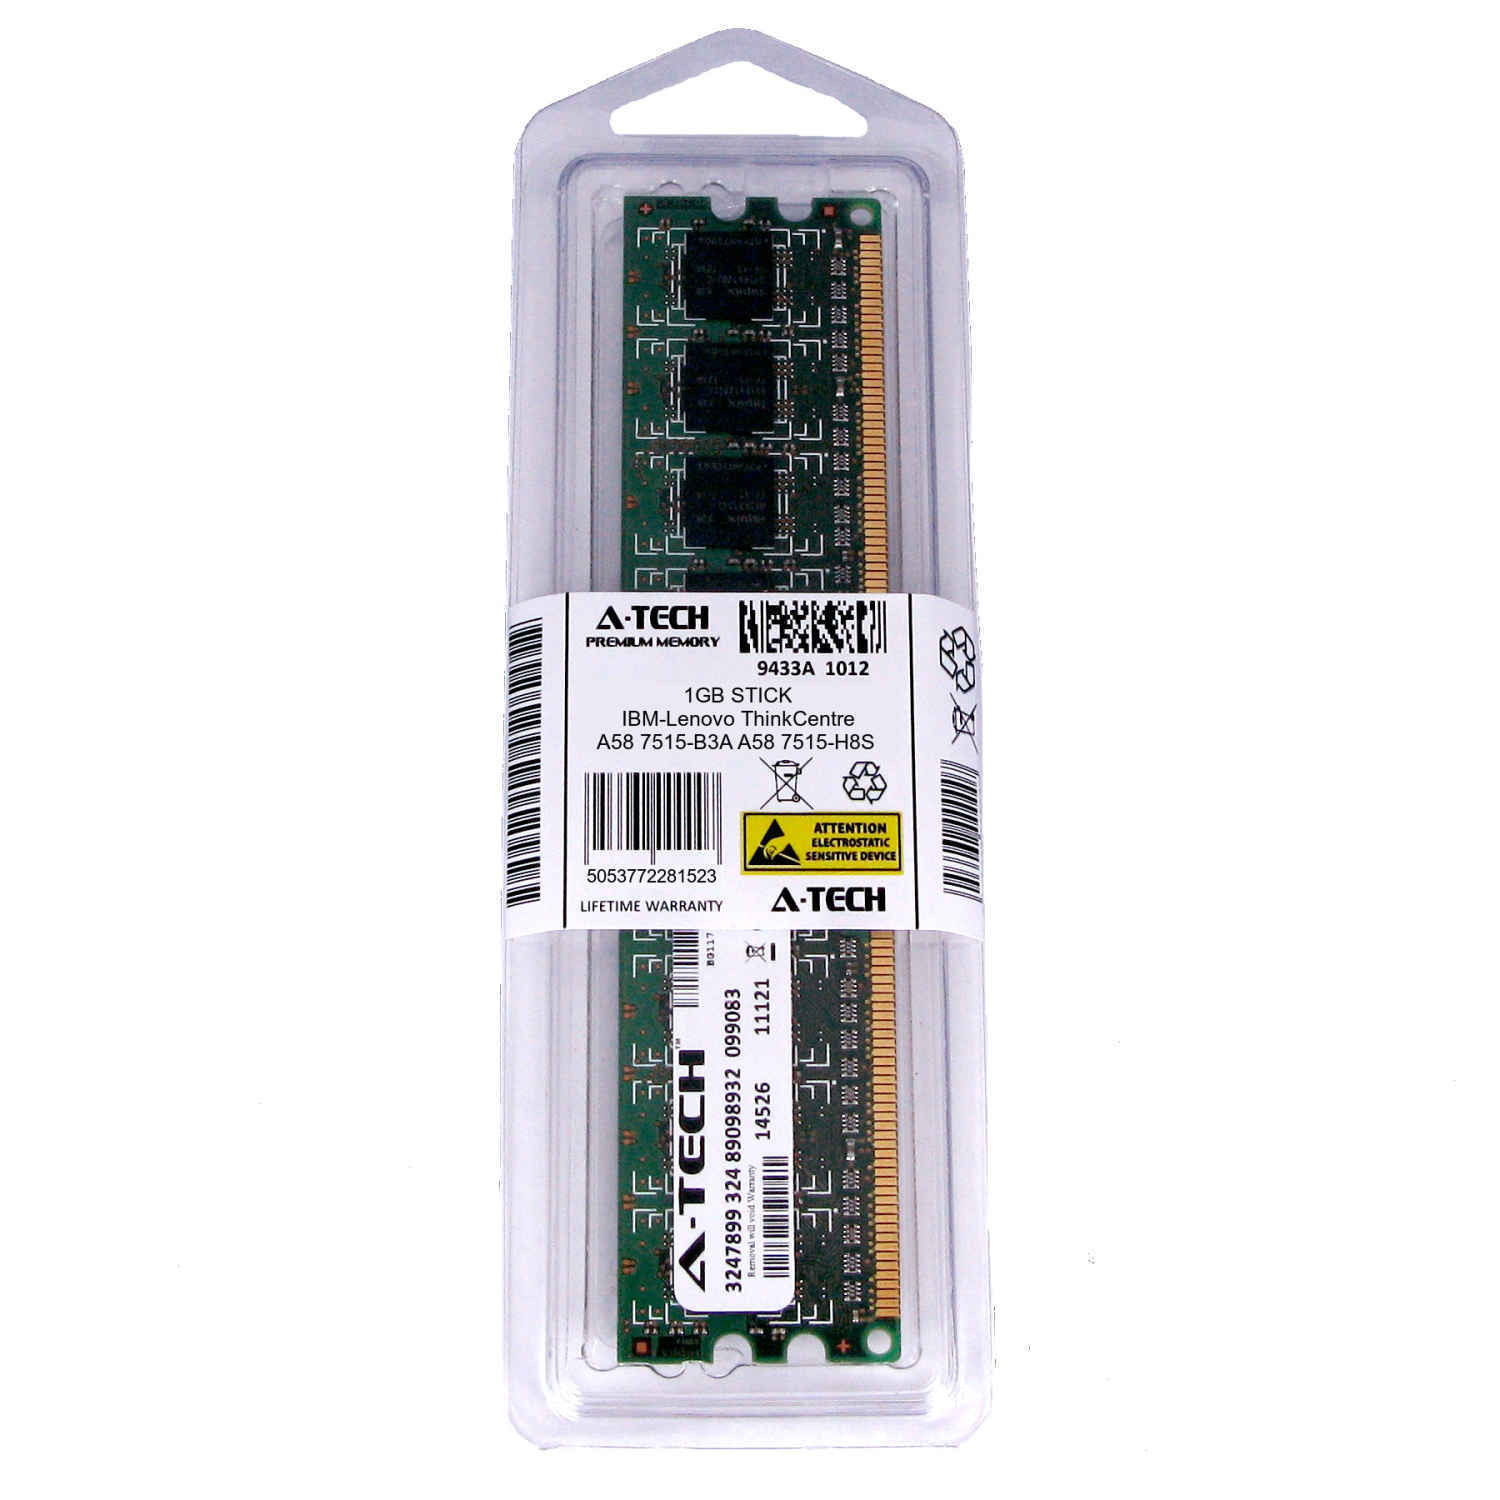 1GB DIMM IBM-Lenovo ThinkCentre A58 7515-B3A 7515-H8S 7515-M9G Ram Memory